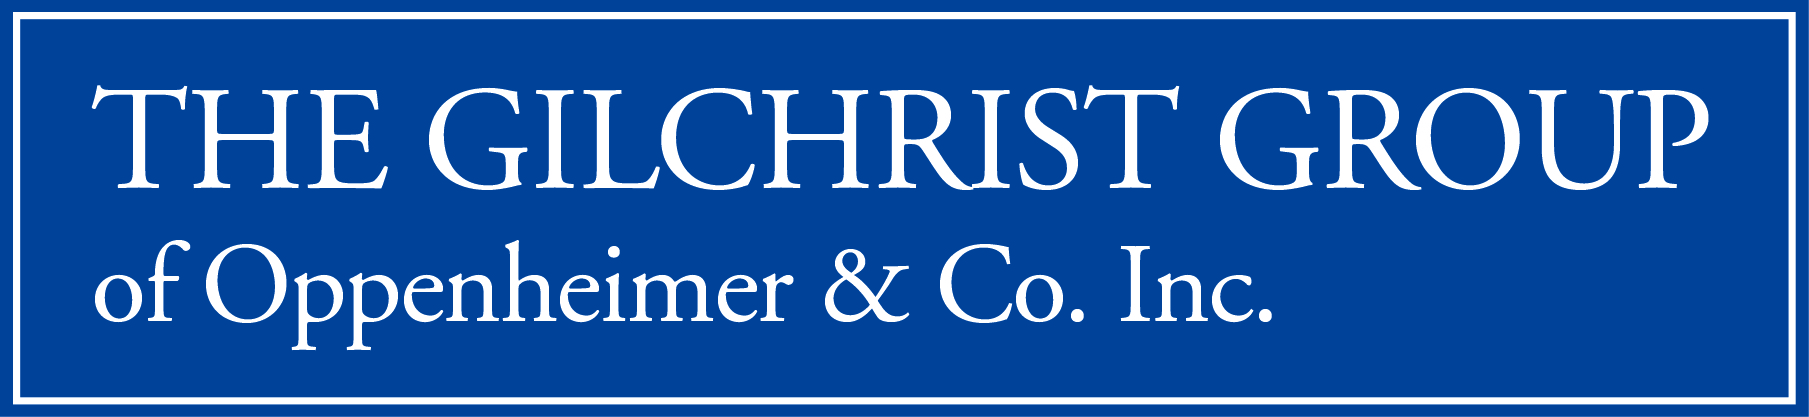 Gilchrist Group logo